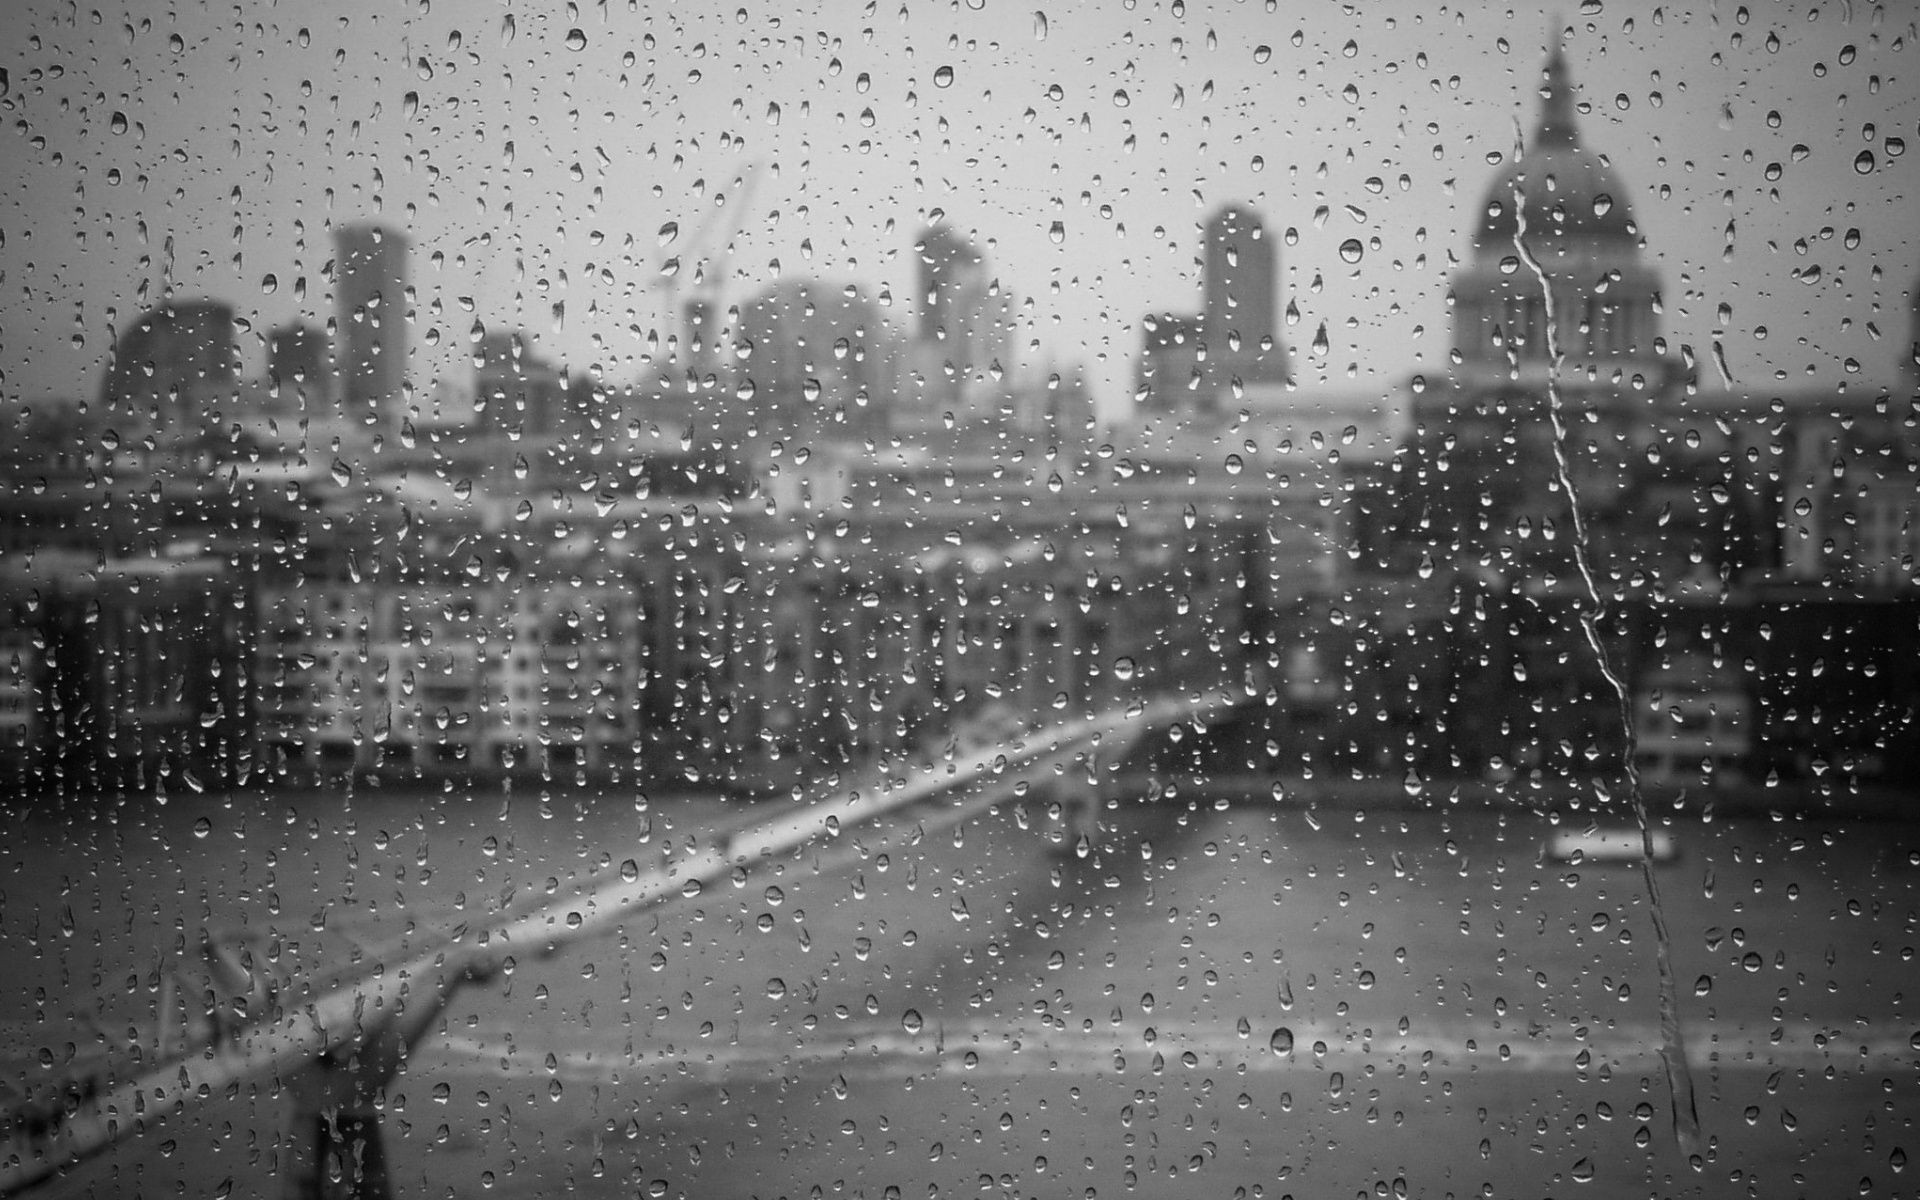 bridges rain city street splash monochrome abstract urban art water winter reflection wet light dark black and white desktop